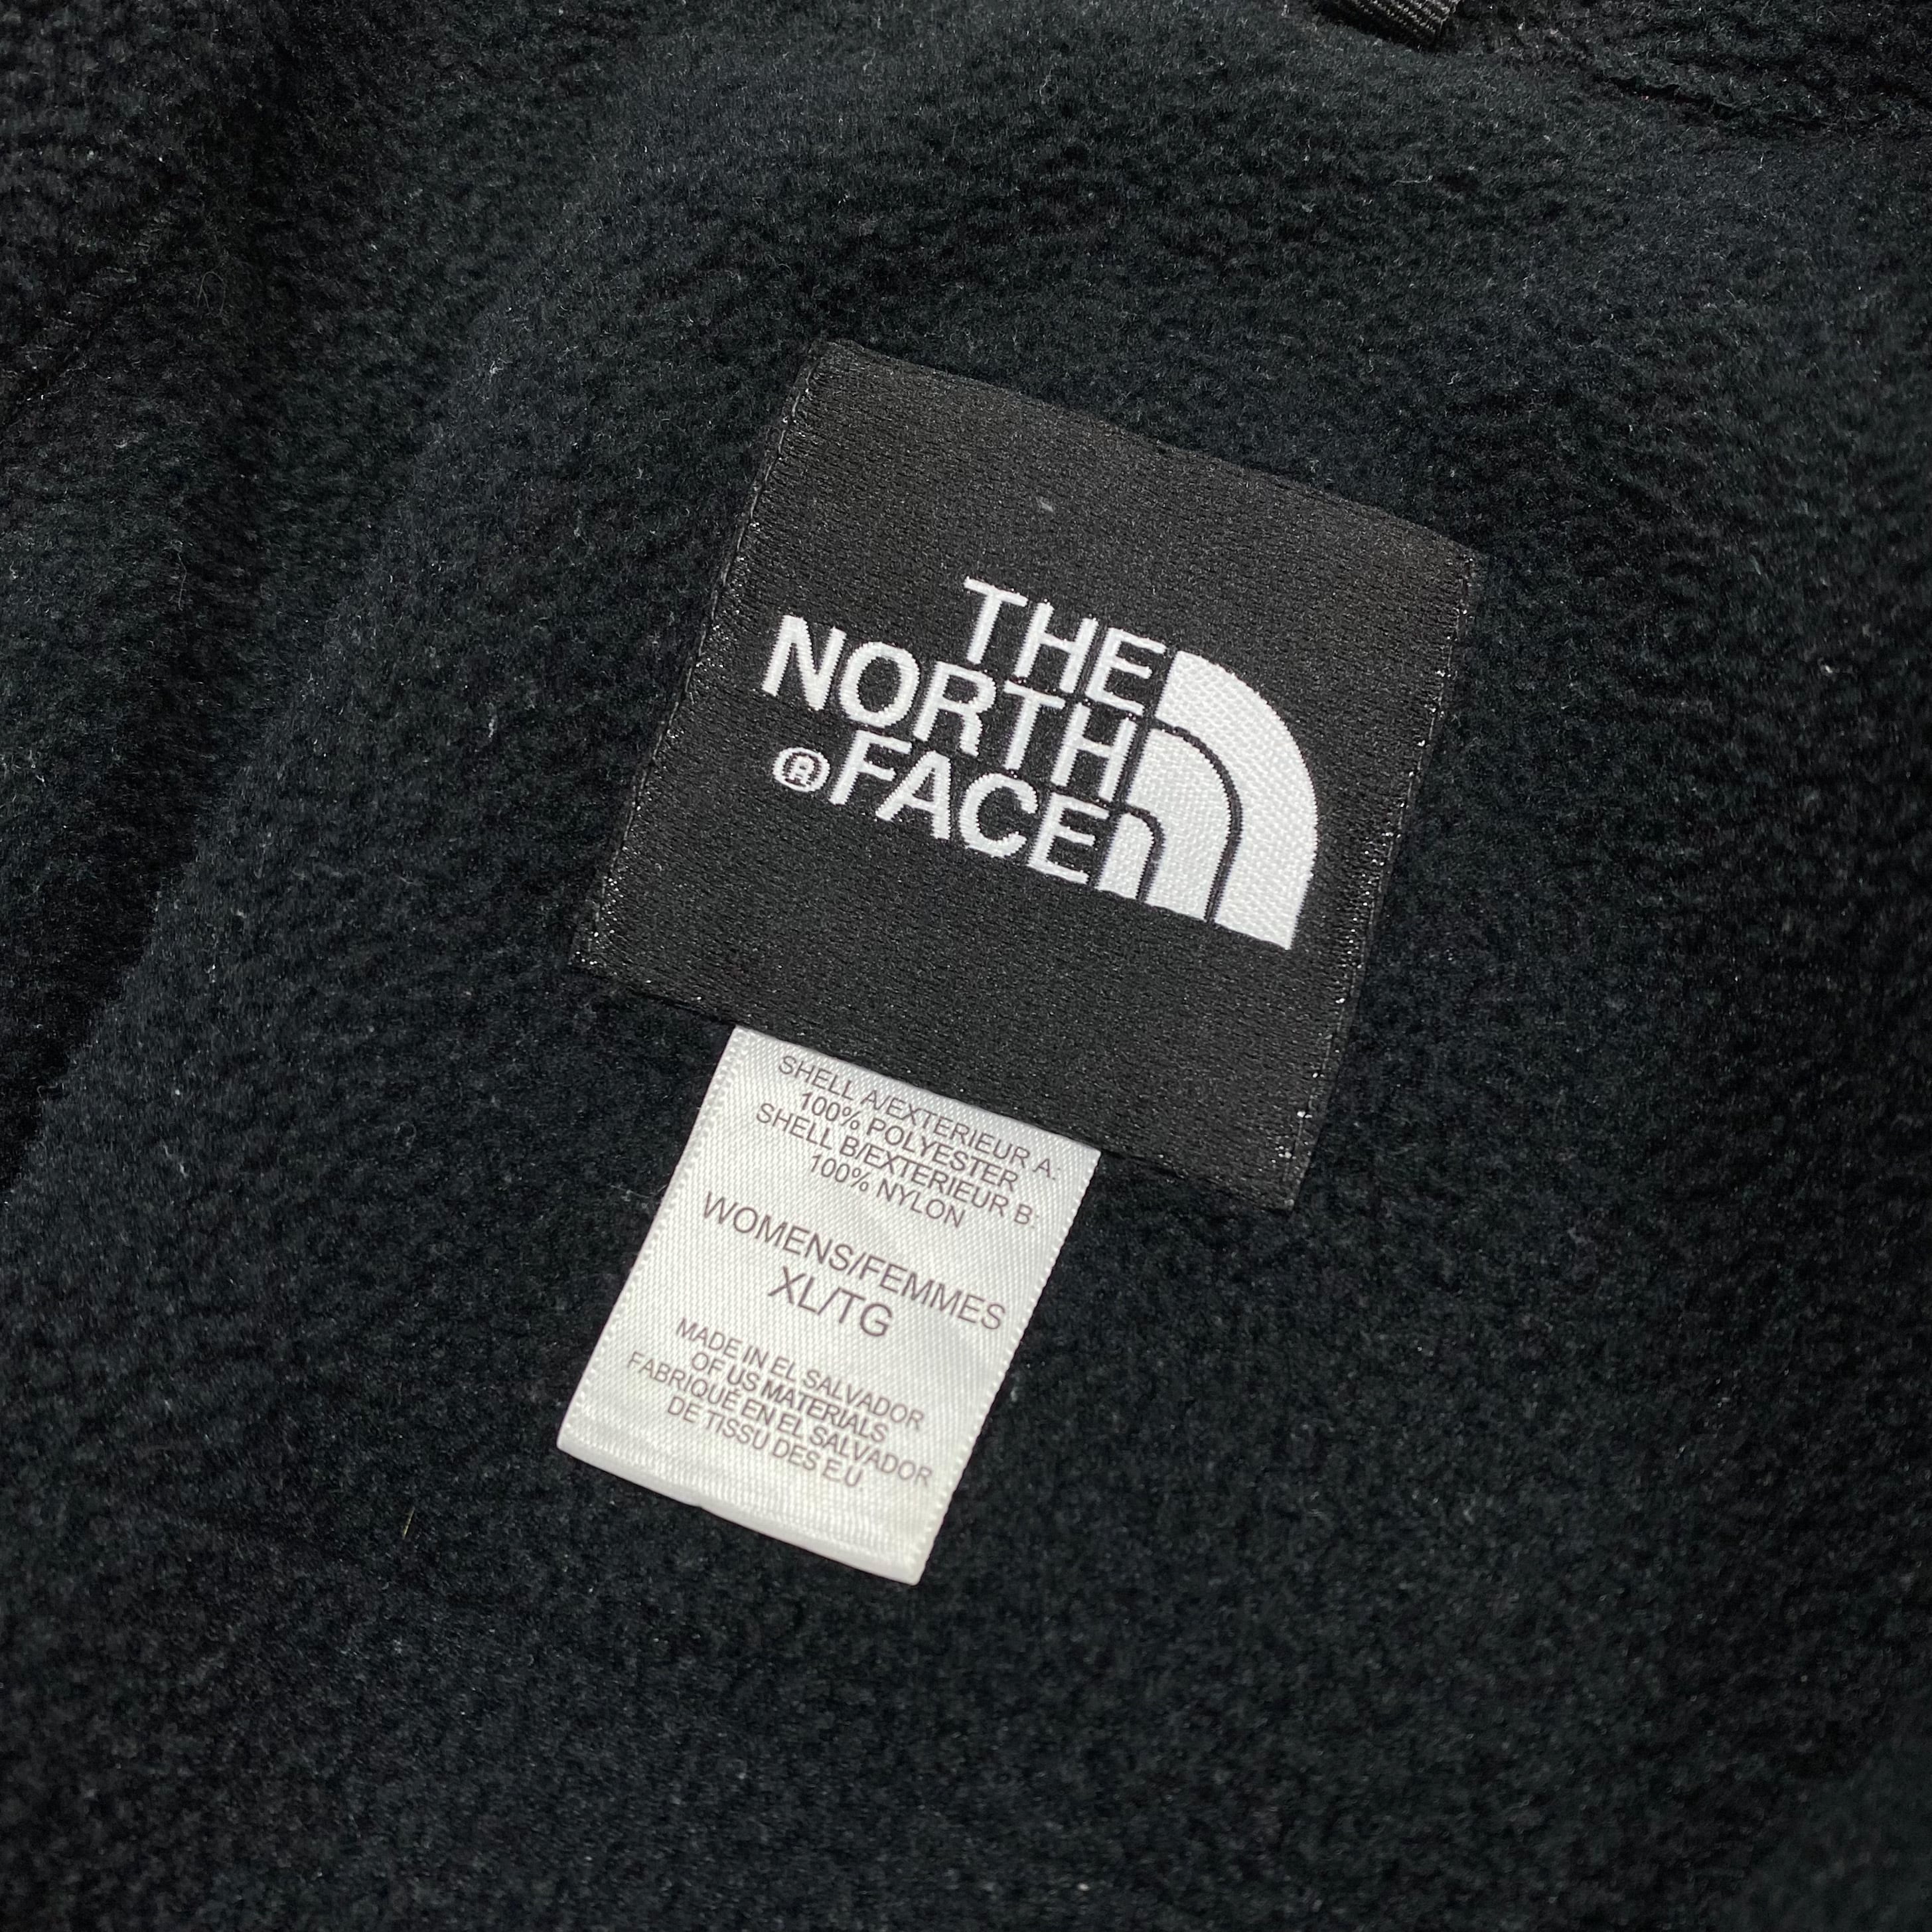 US規格ノースフェイスデナリジャケット黒ブラックポーラテックS~M刺繍ロゴ